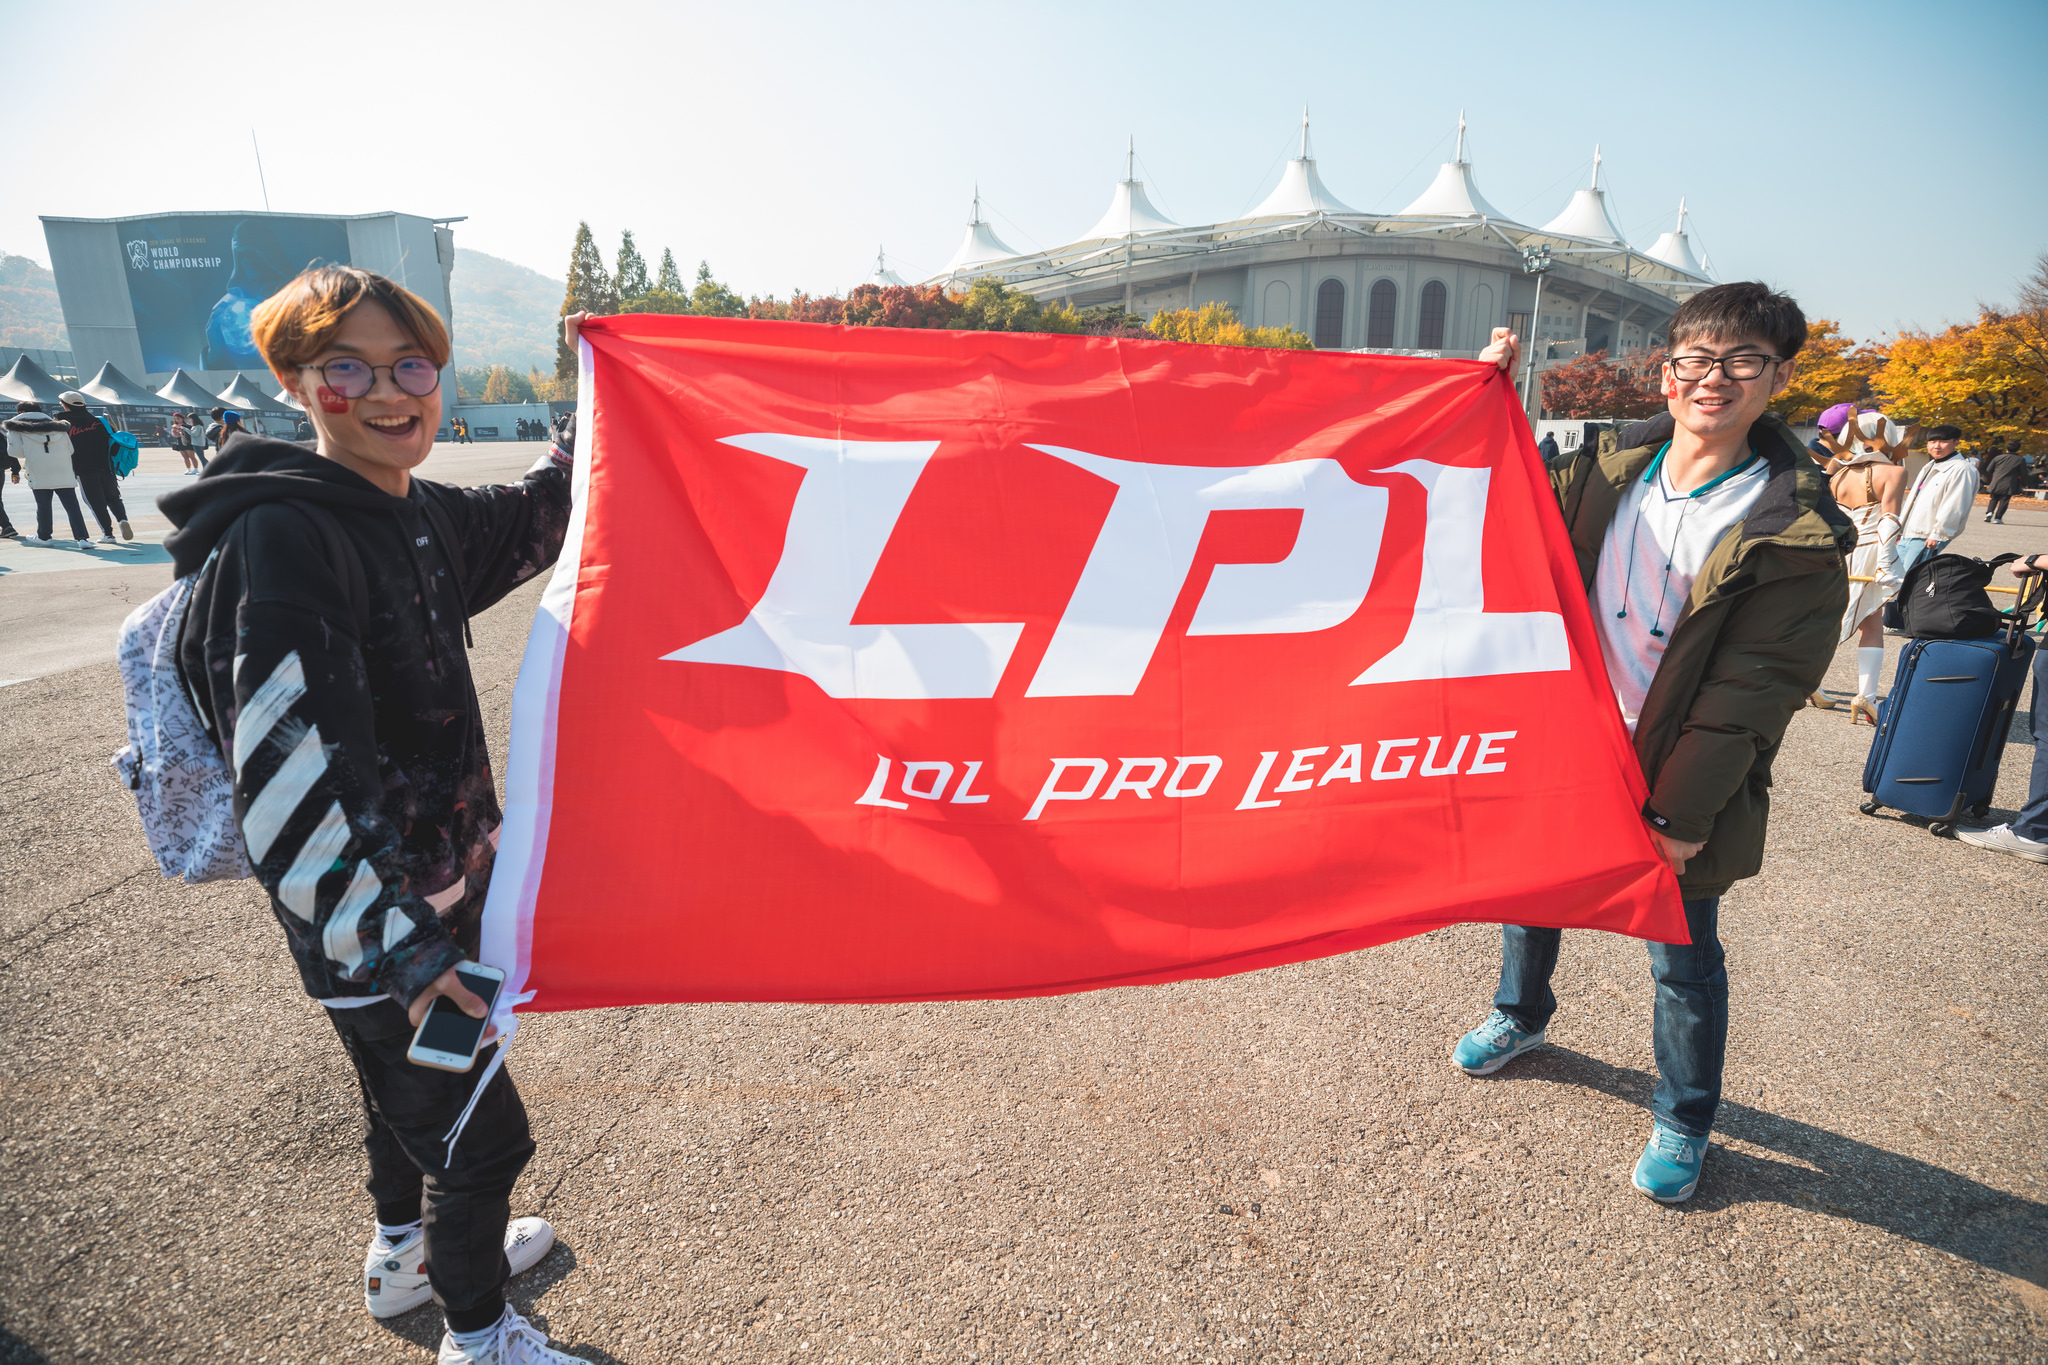 LPL – JD Gaming Versus Top Esports, An Analysis Of The League Pro League Superstar Teams